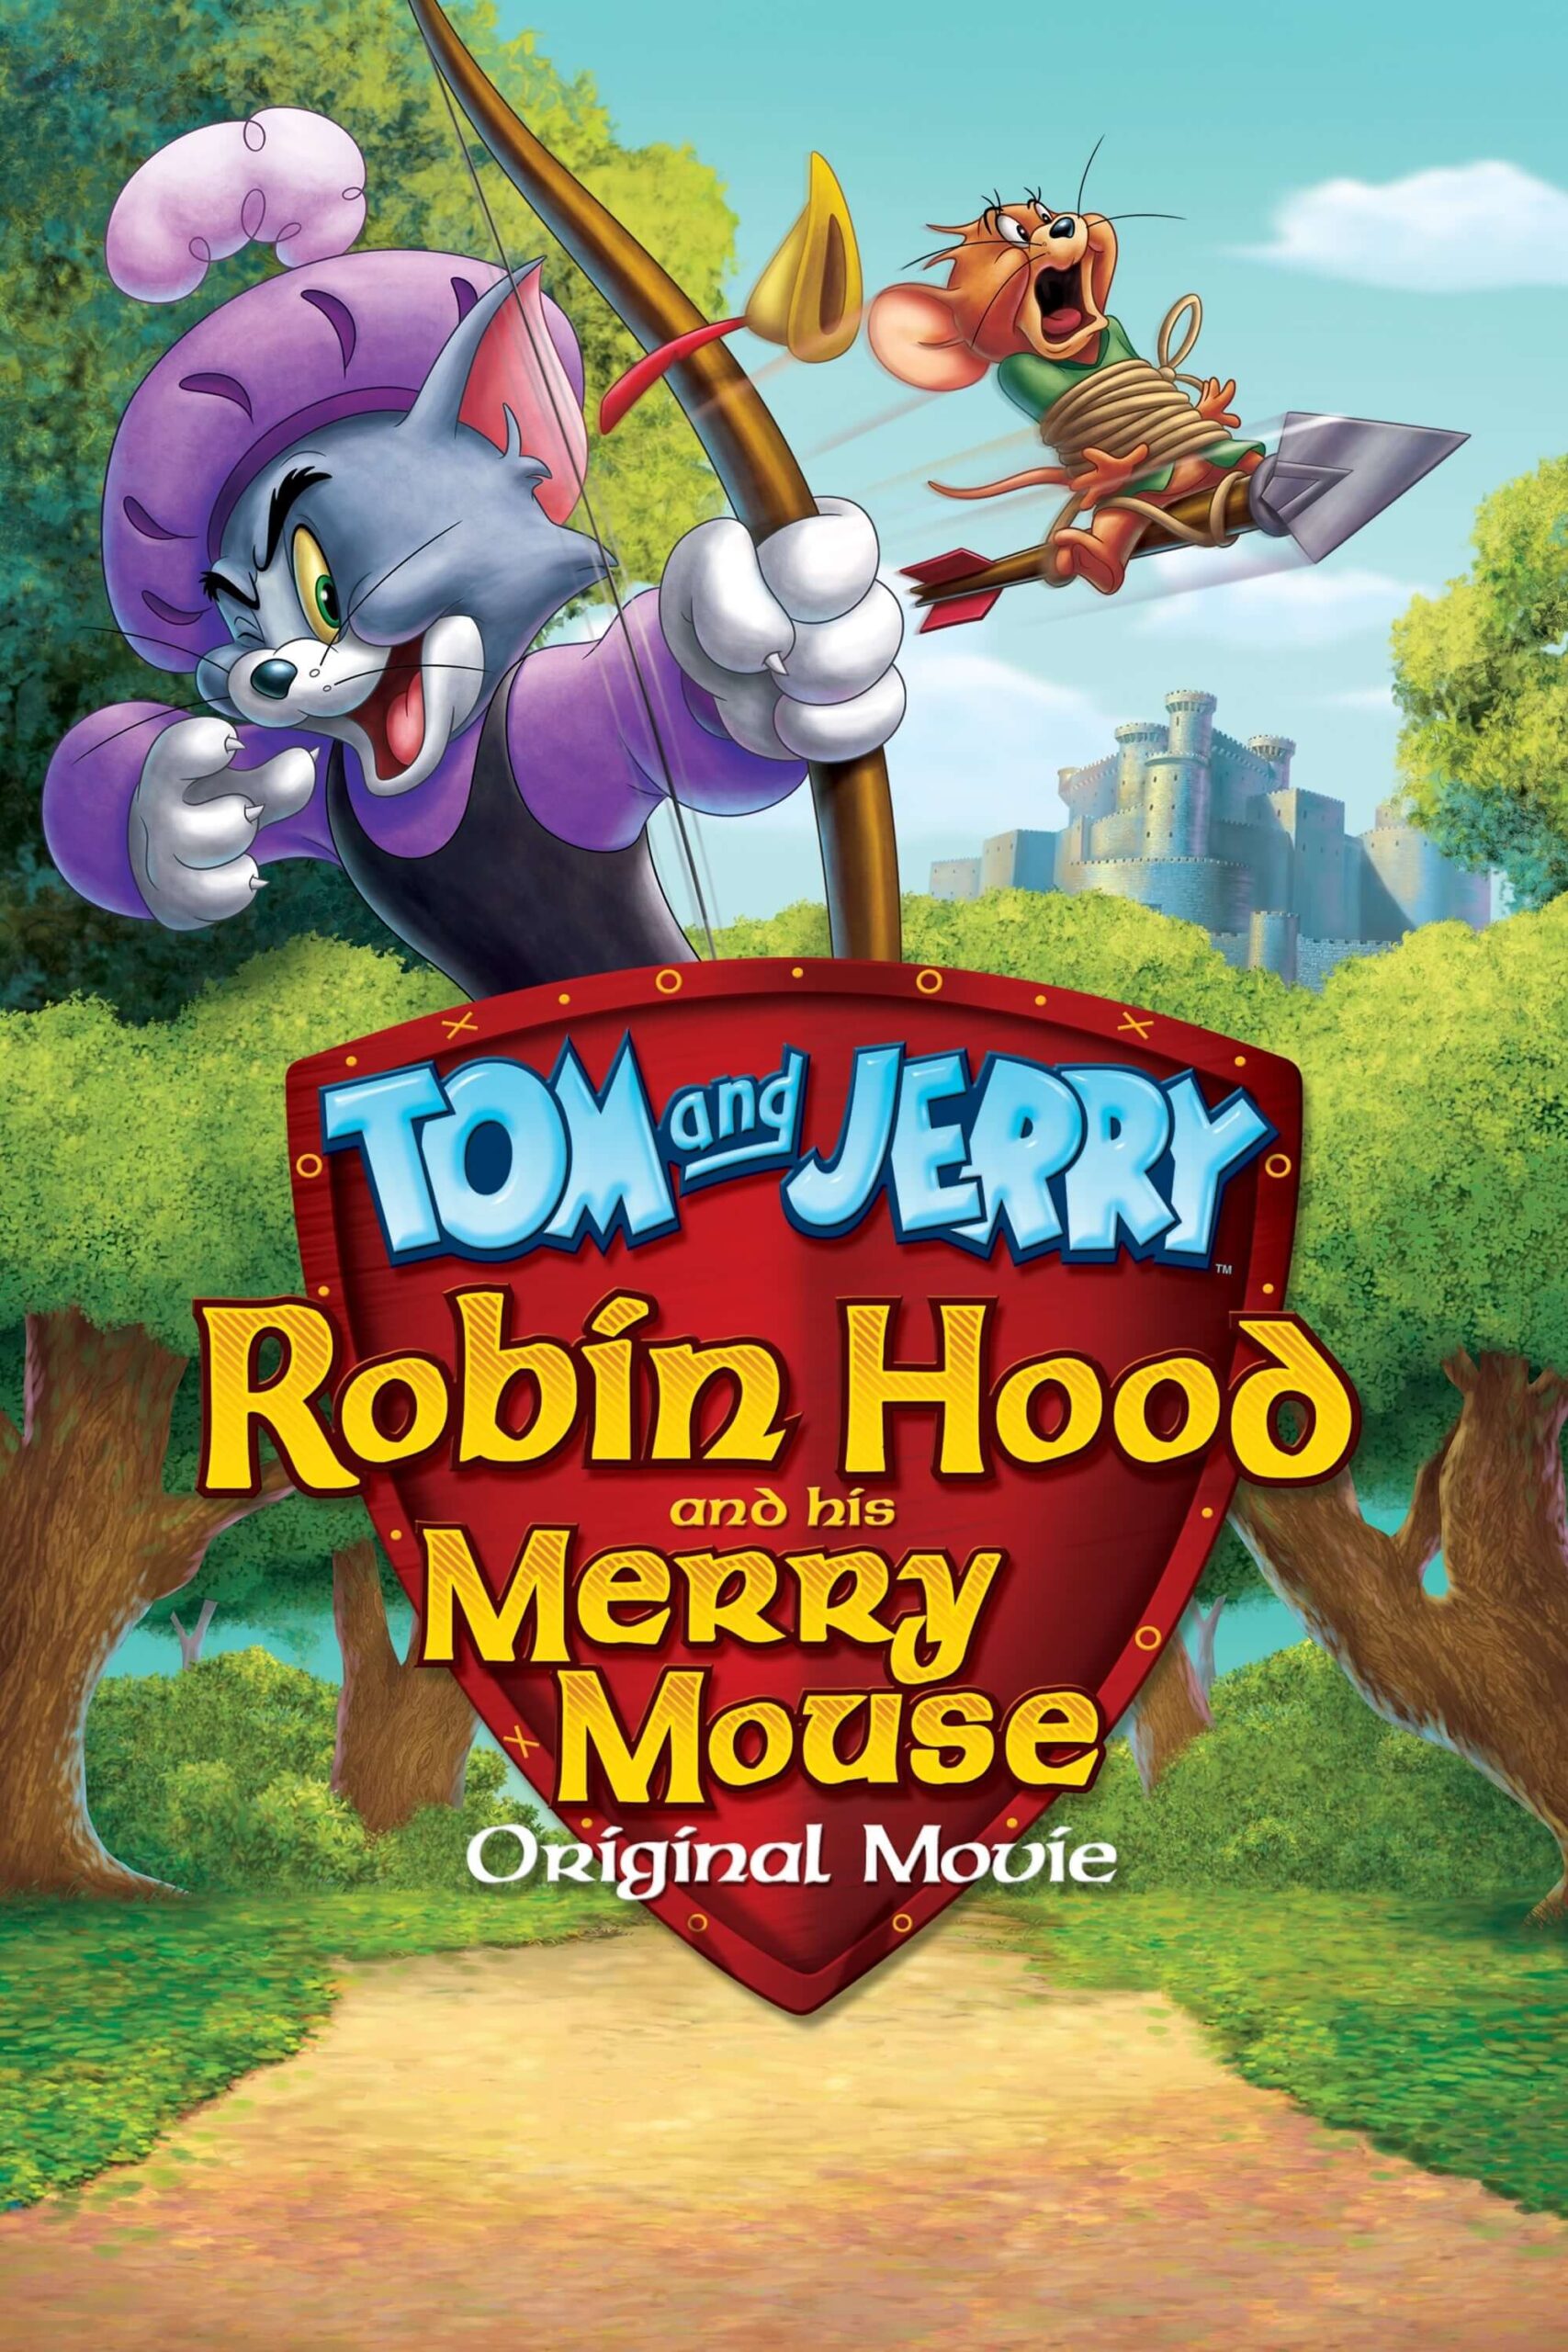 تام و جری : رابین هود و موش خوش شانس (Tom and Jerry: Robin Hood and His Merry Mouse)